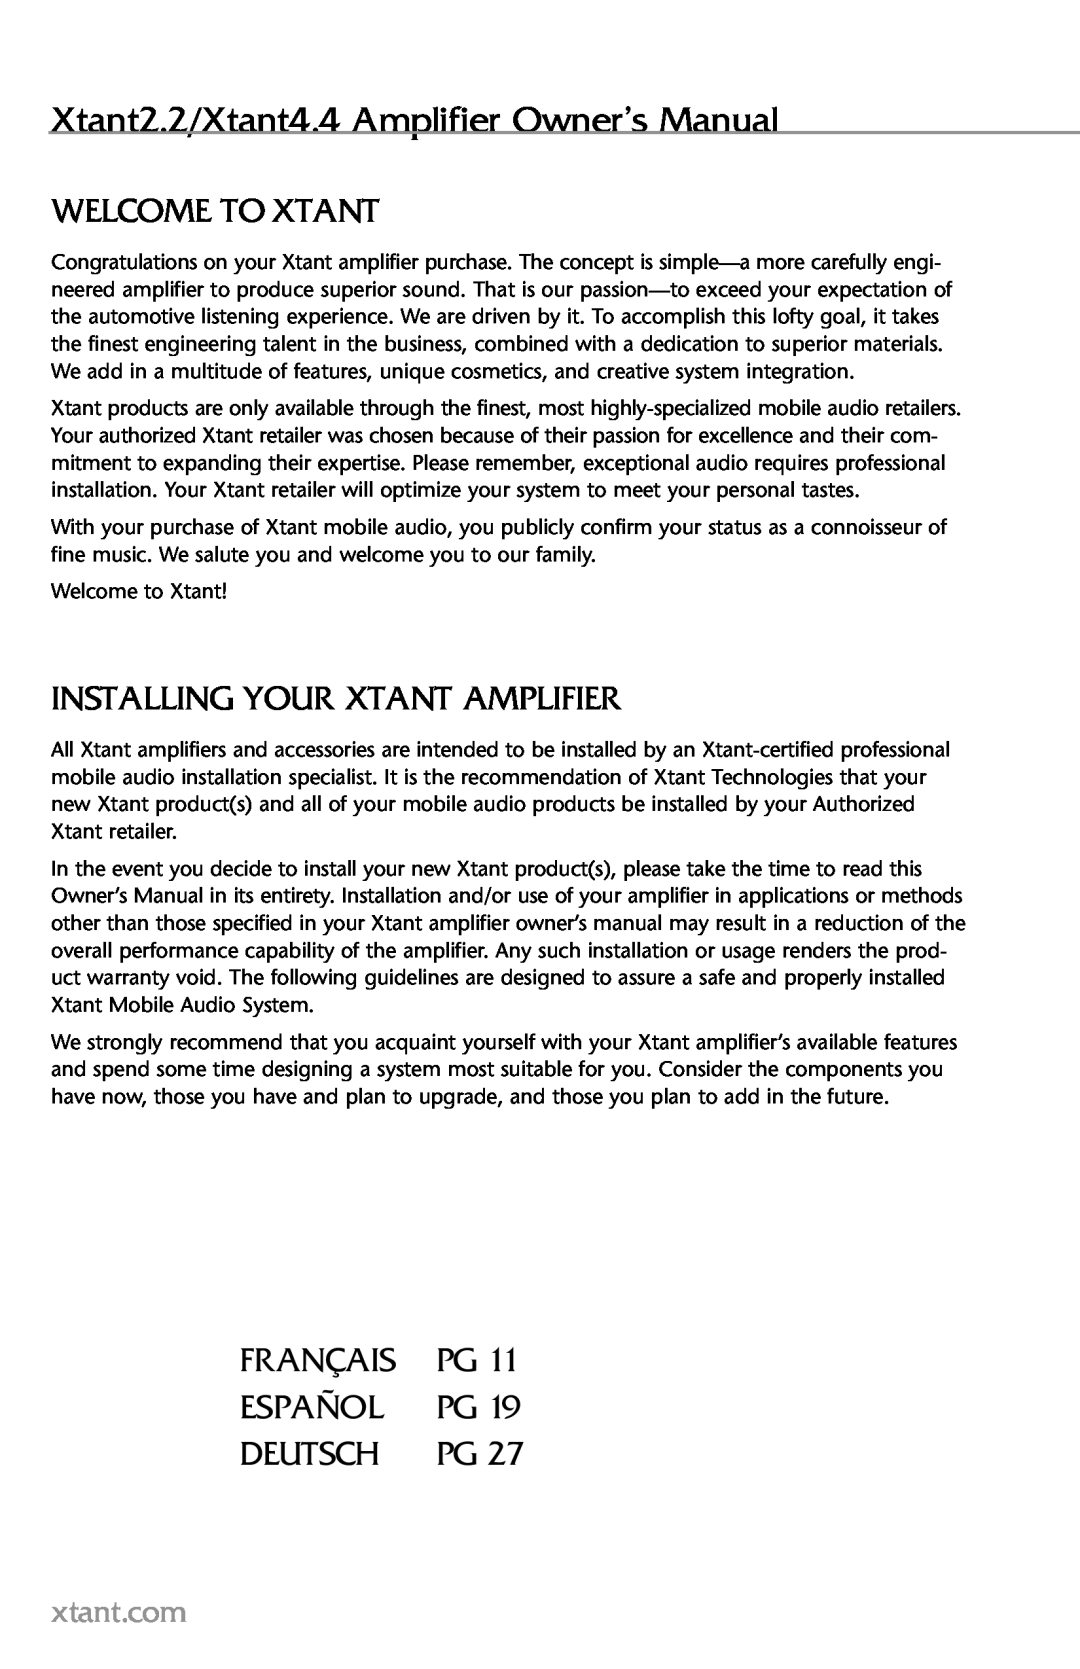 Xtant 2.2, 4.4 owner manual Welcome To Xtant, Installing Your Xtant Amplifier, Français, Español, Deutsch 